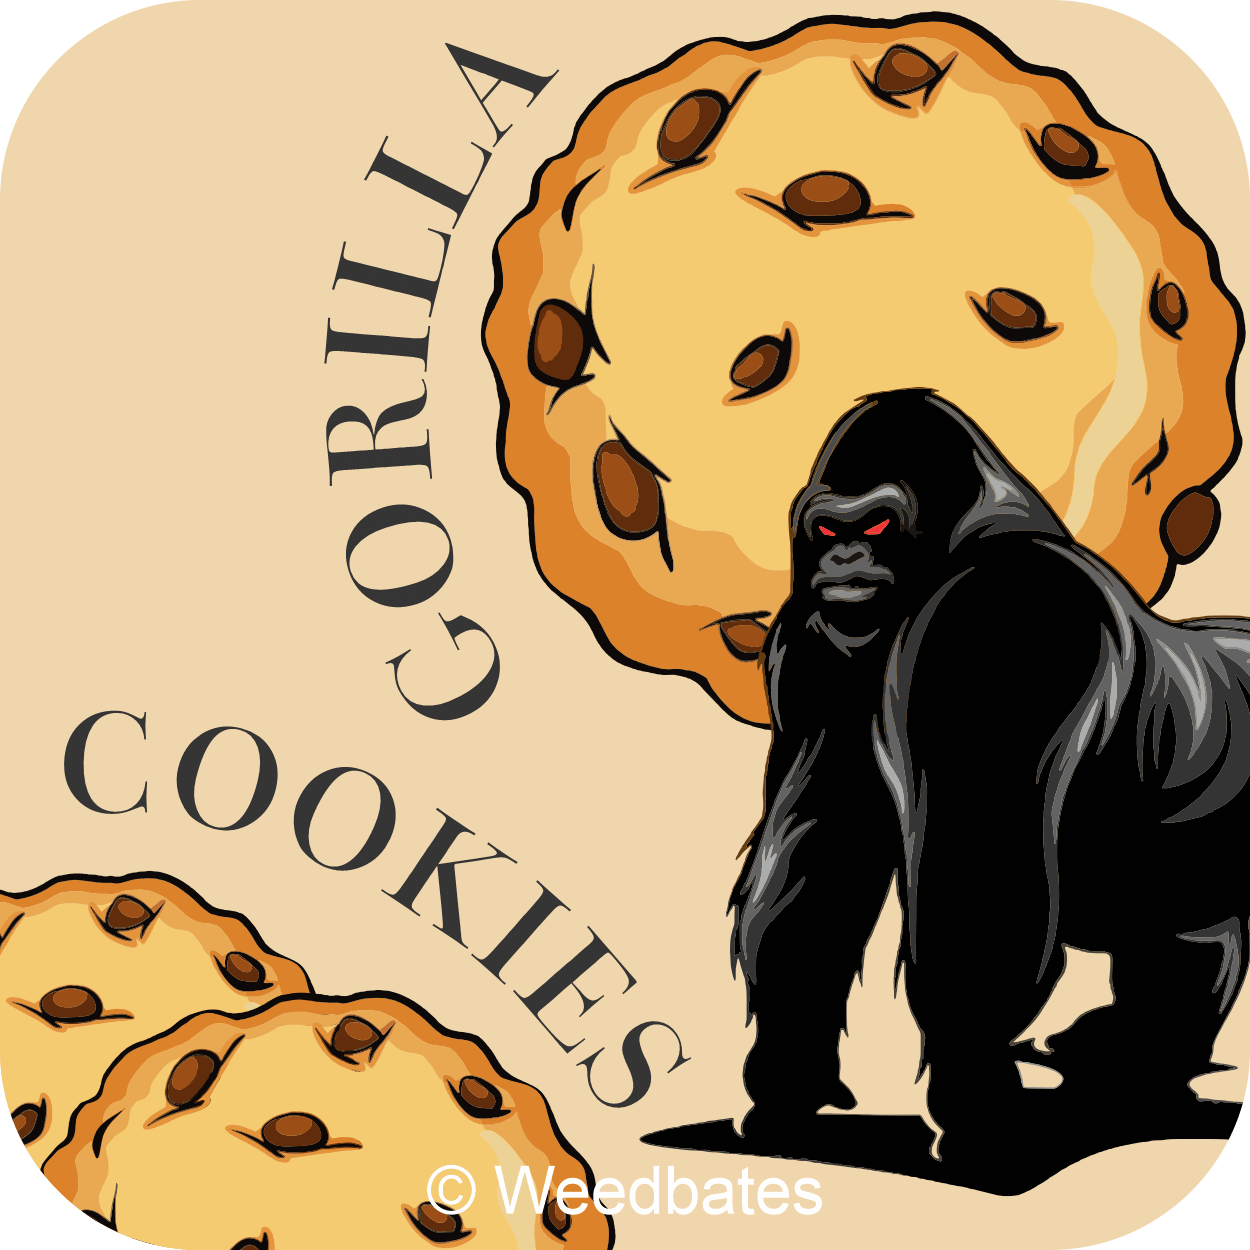 Gorilla Cookies strain